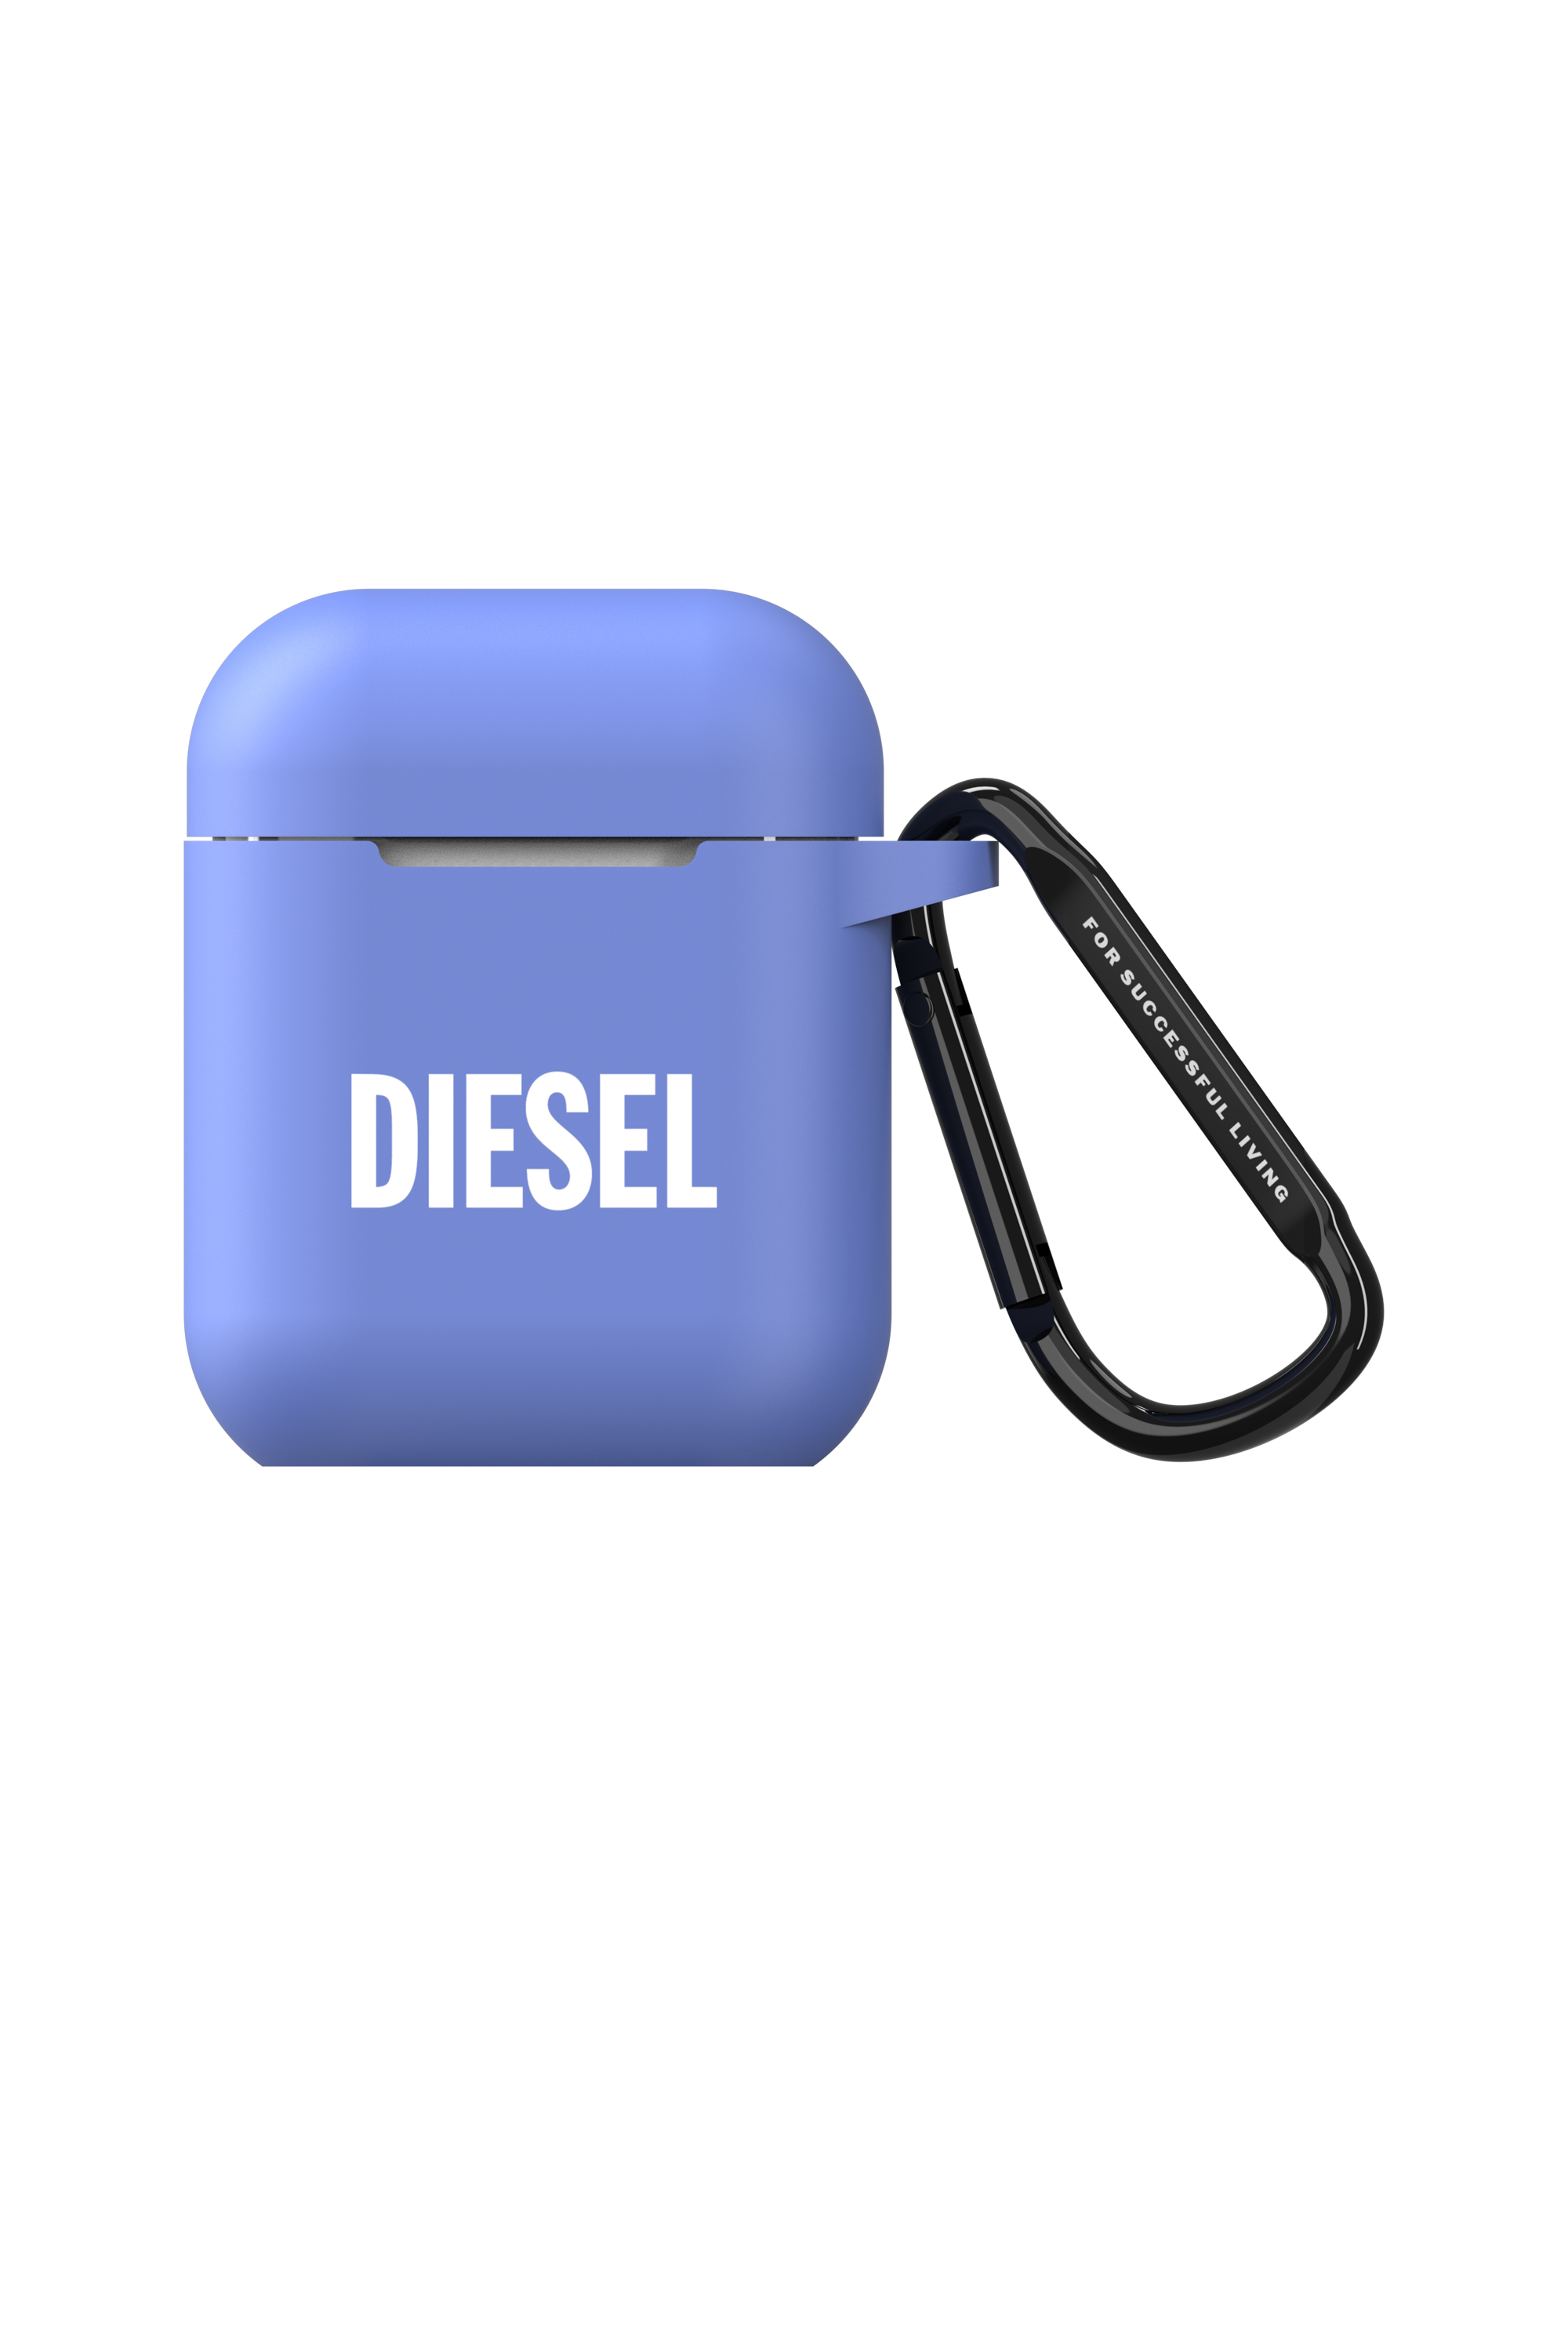 Diesel - 48319 AIRPOD CASE, Blue - Image 1